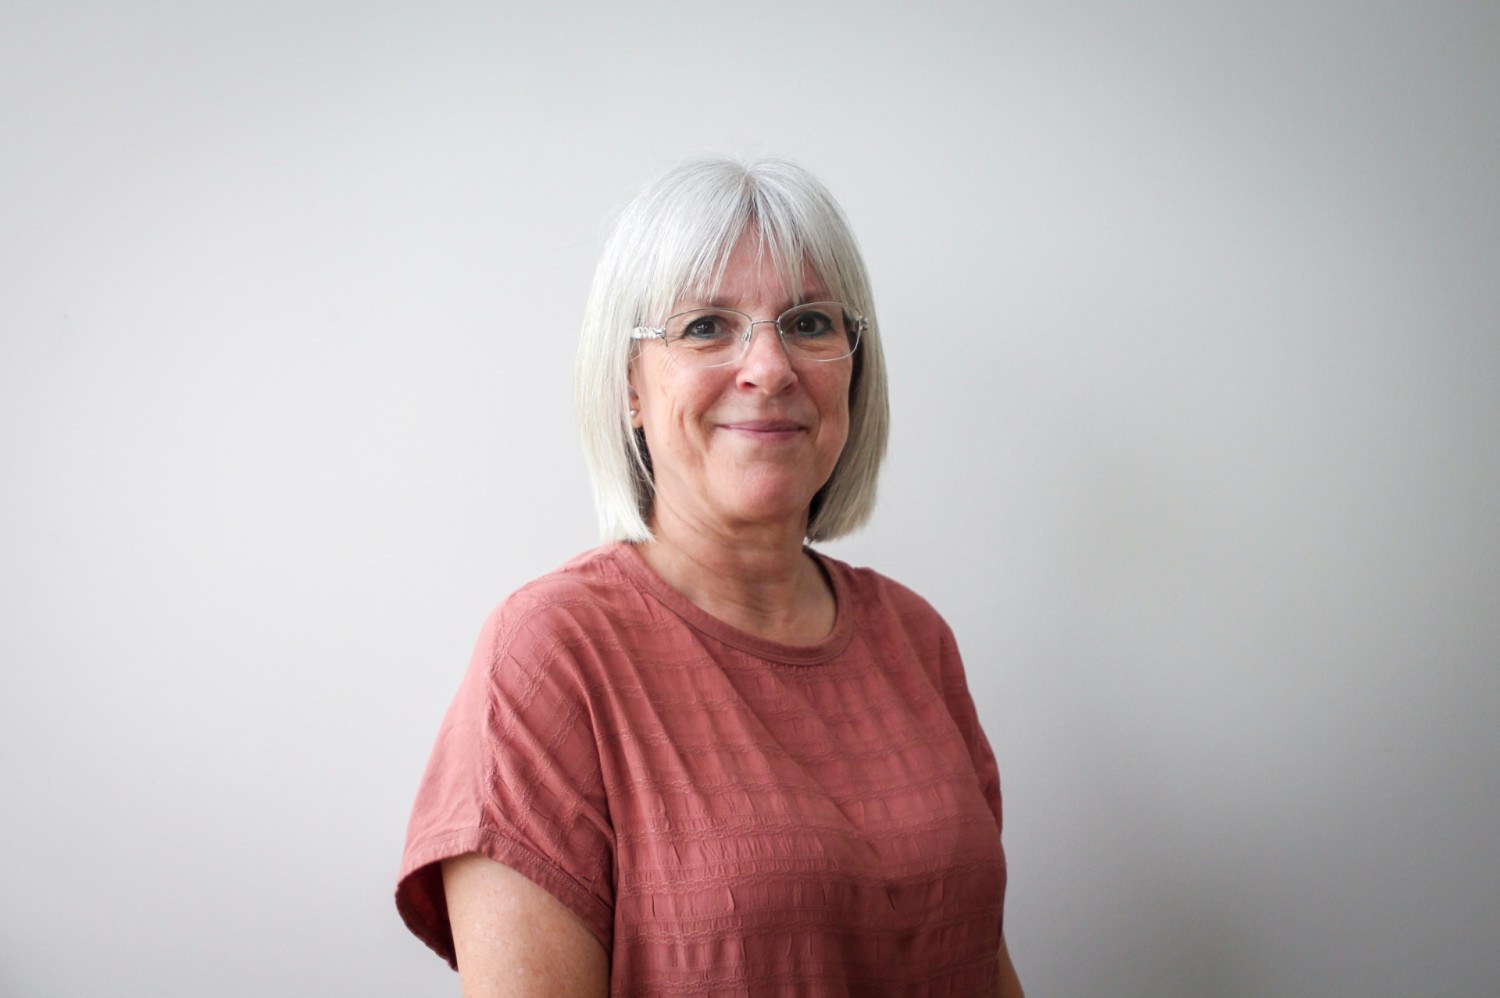 Profile of Wendy Harris smiling wearing a salmon short sleeved shirt